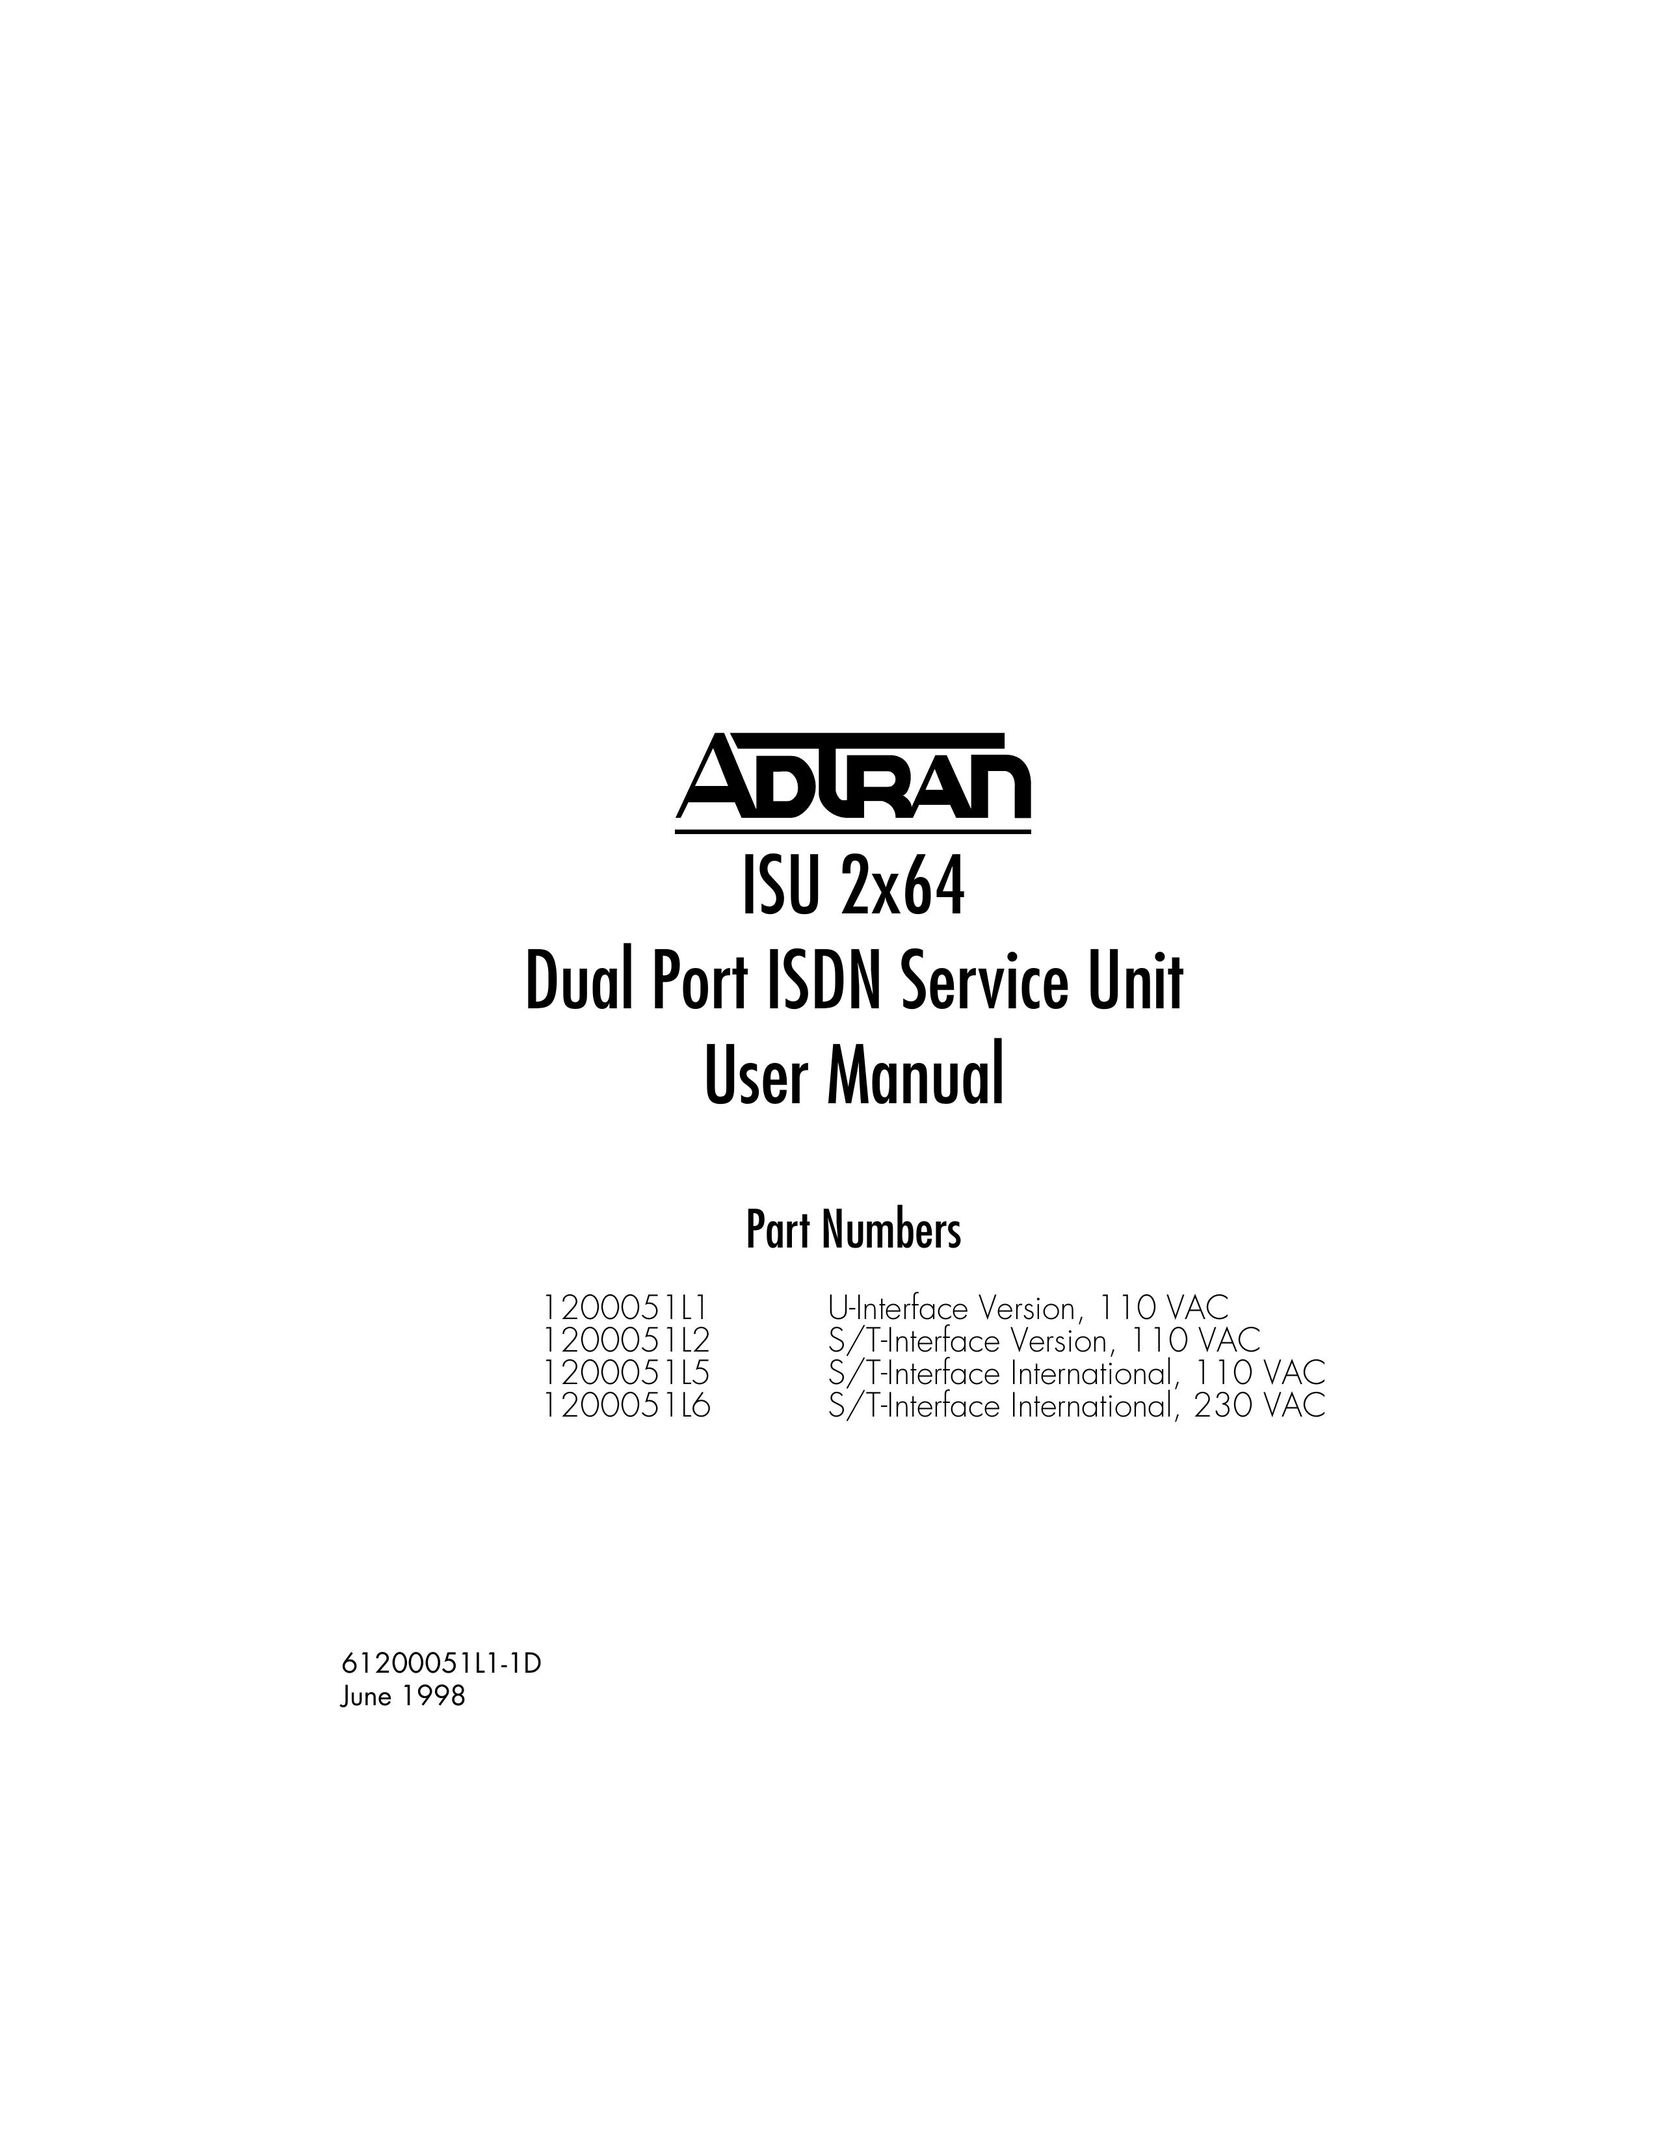 ADTRAN 1200051L6 Network Card User Manual